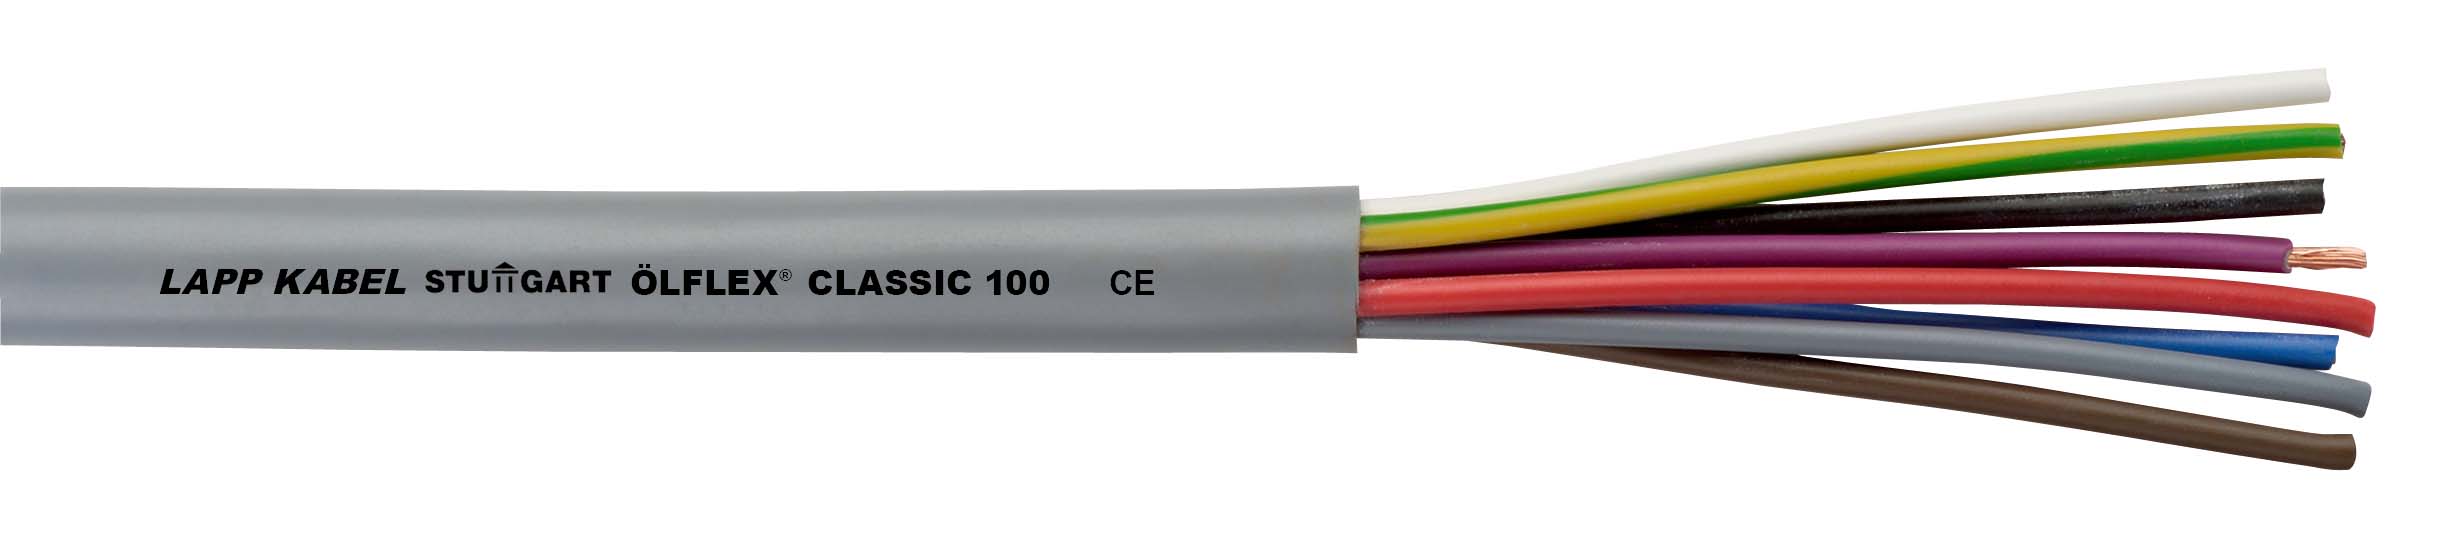 Lapp Kabel&Leitung ÖLFLEX CLASSIC 100 7G4 0010103 T500